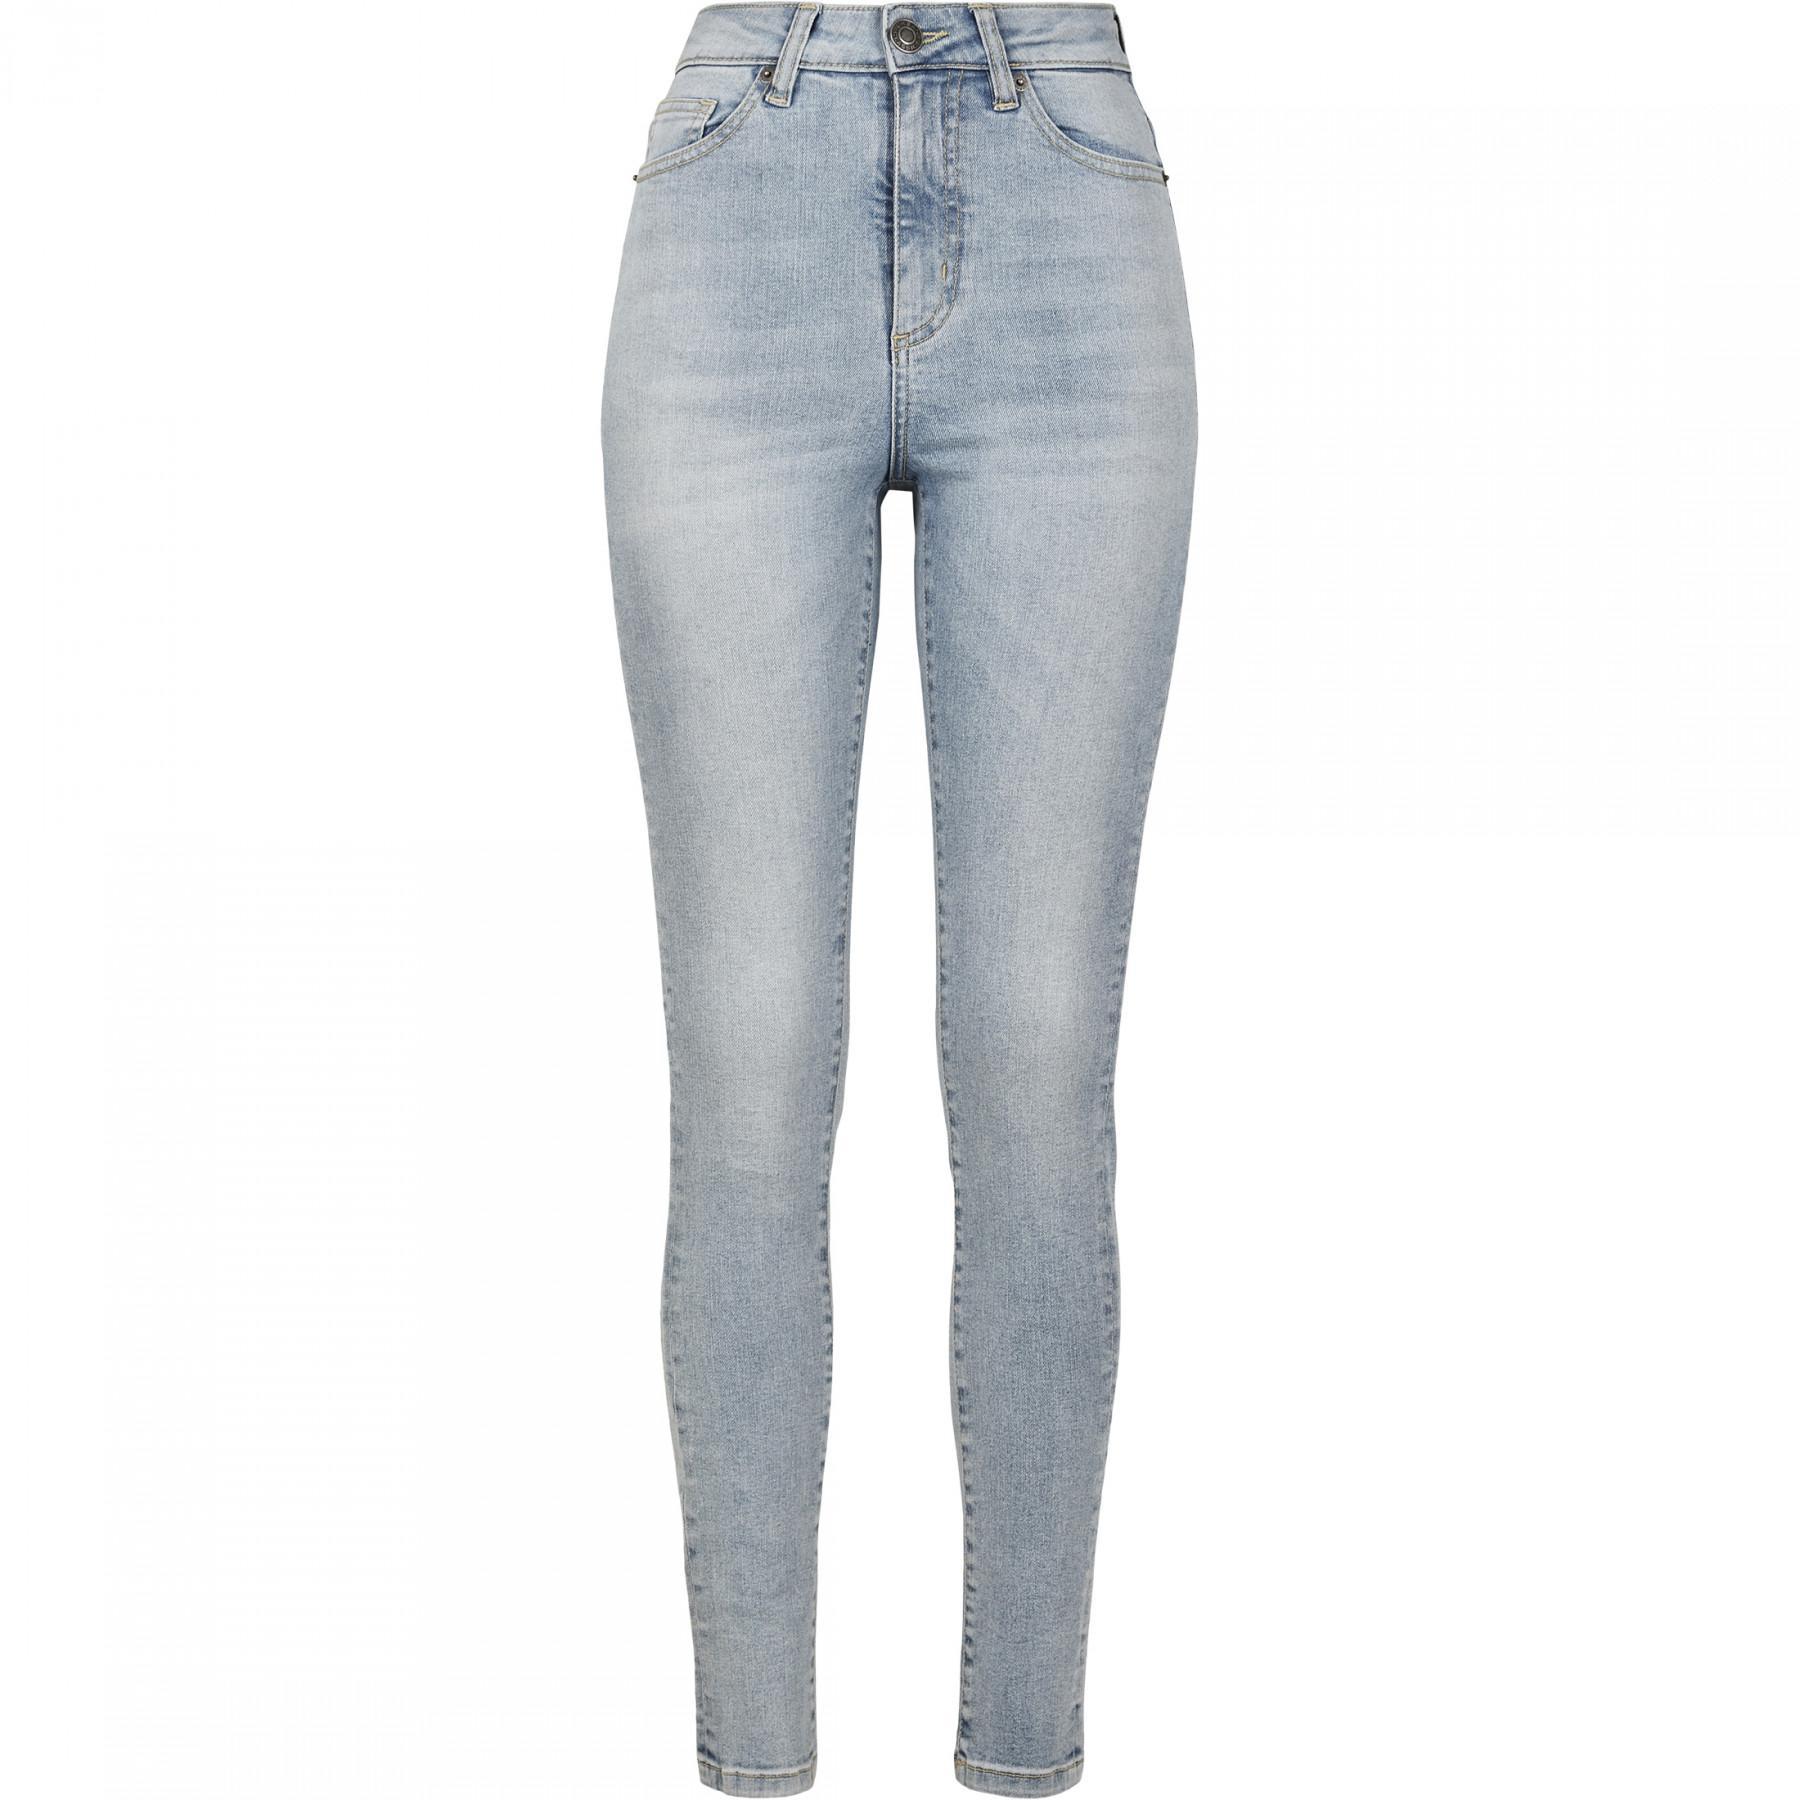 Pantalon jeans femme Urban Classics high waist slim (grandes tailles)